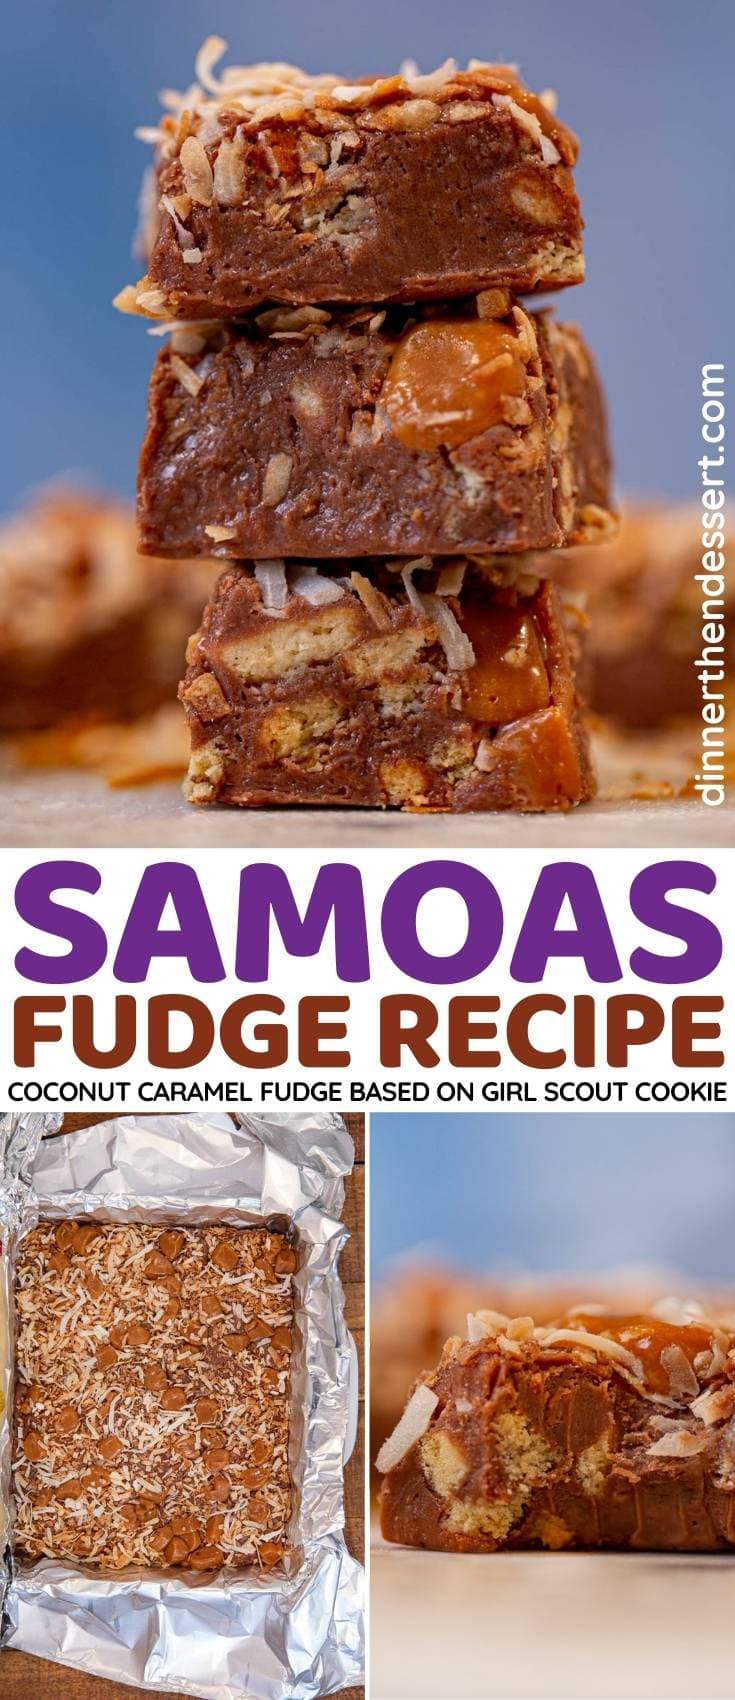 Samoas Fudge collage